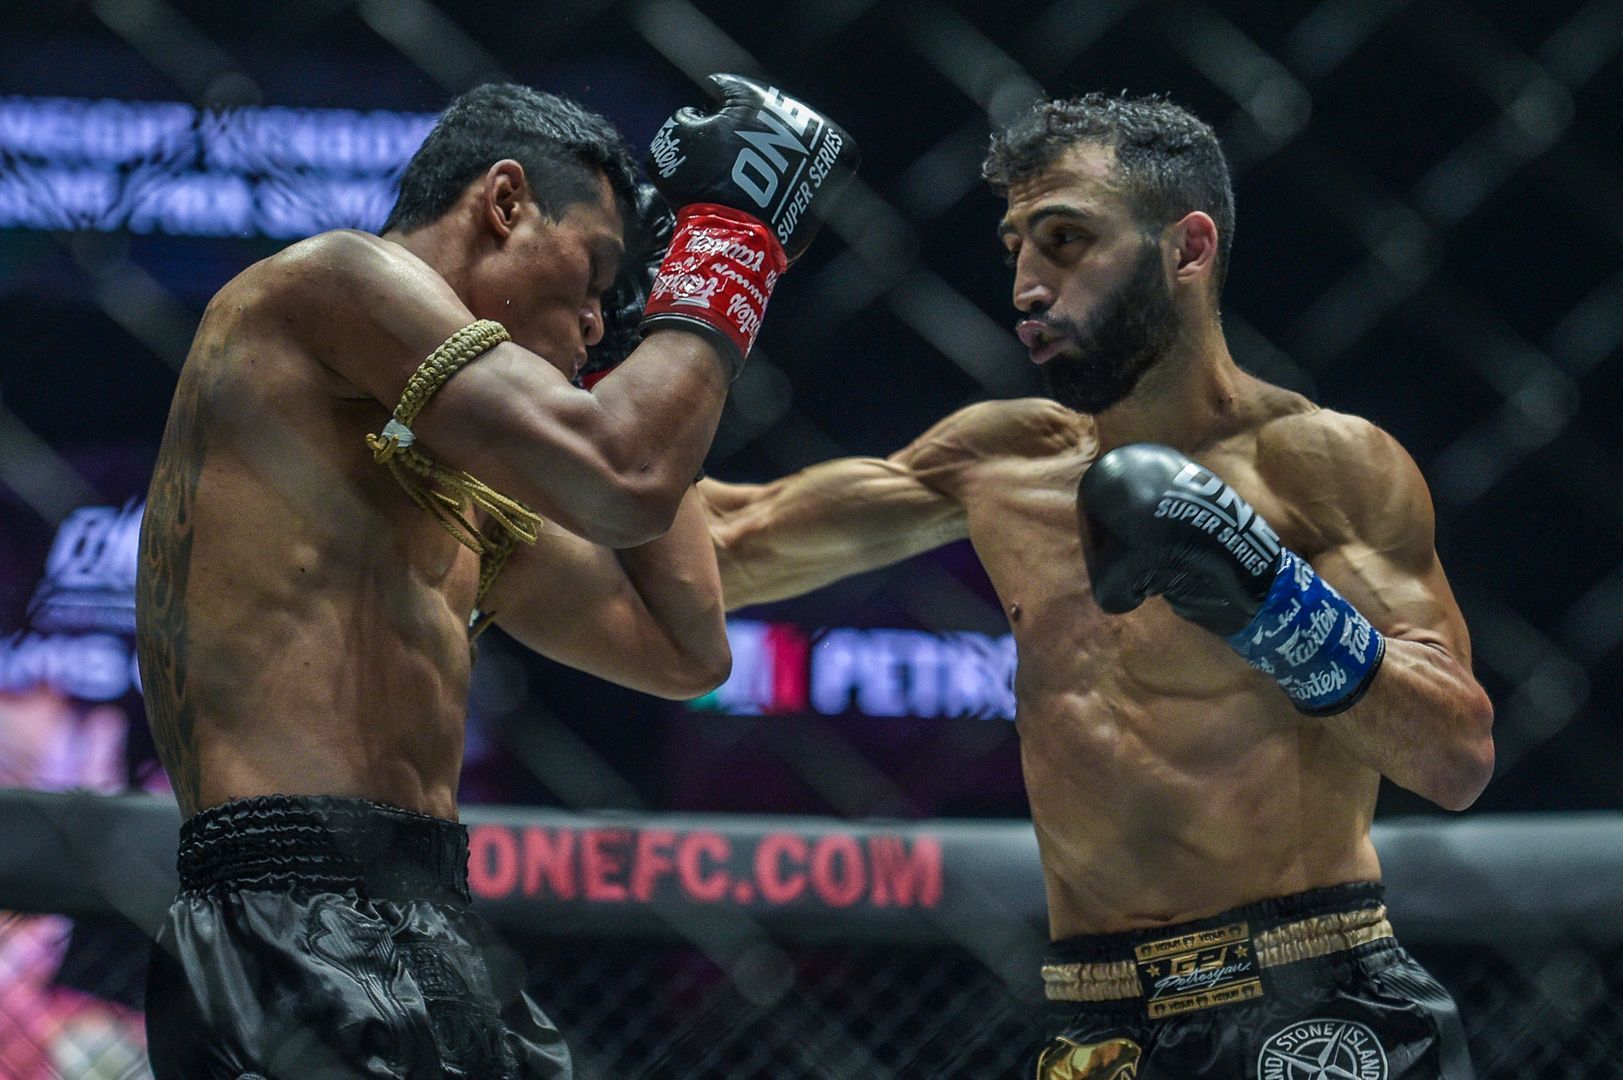 Italian-Armenian kickboxer Giorgio Petrosyan knocks out Jo Nattawut